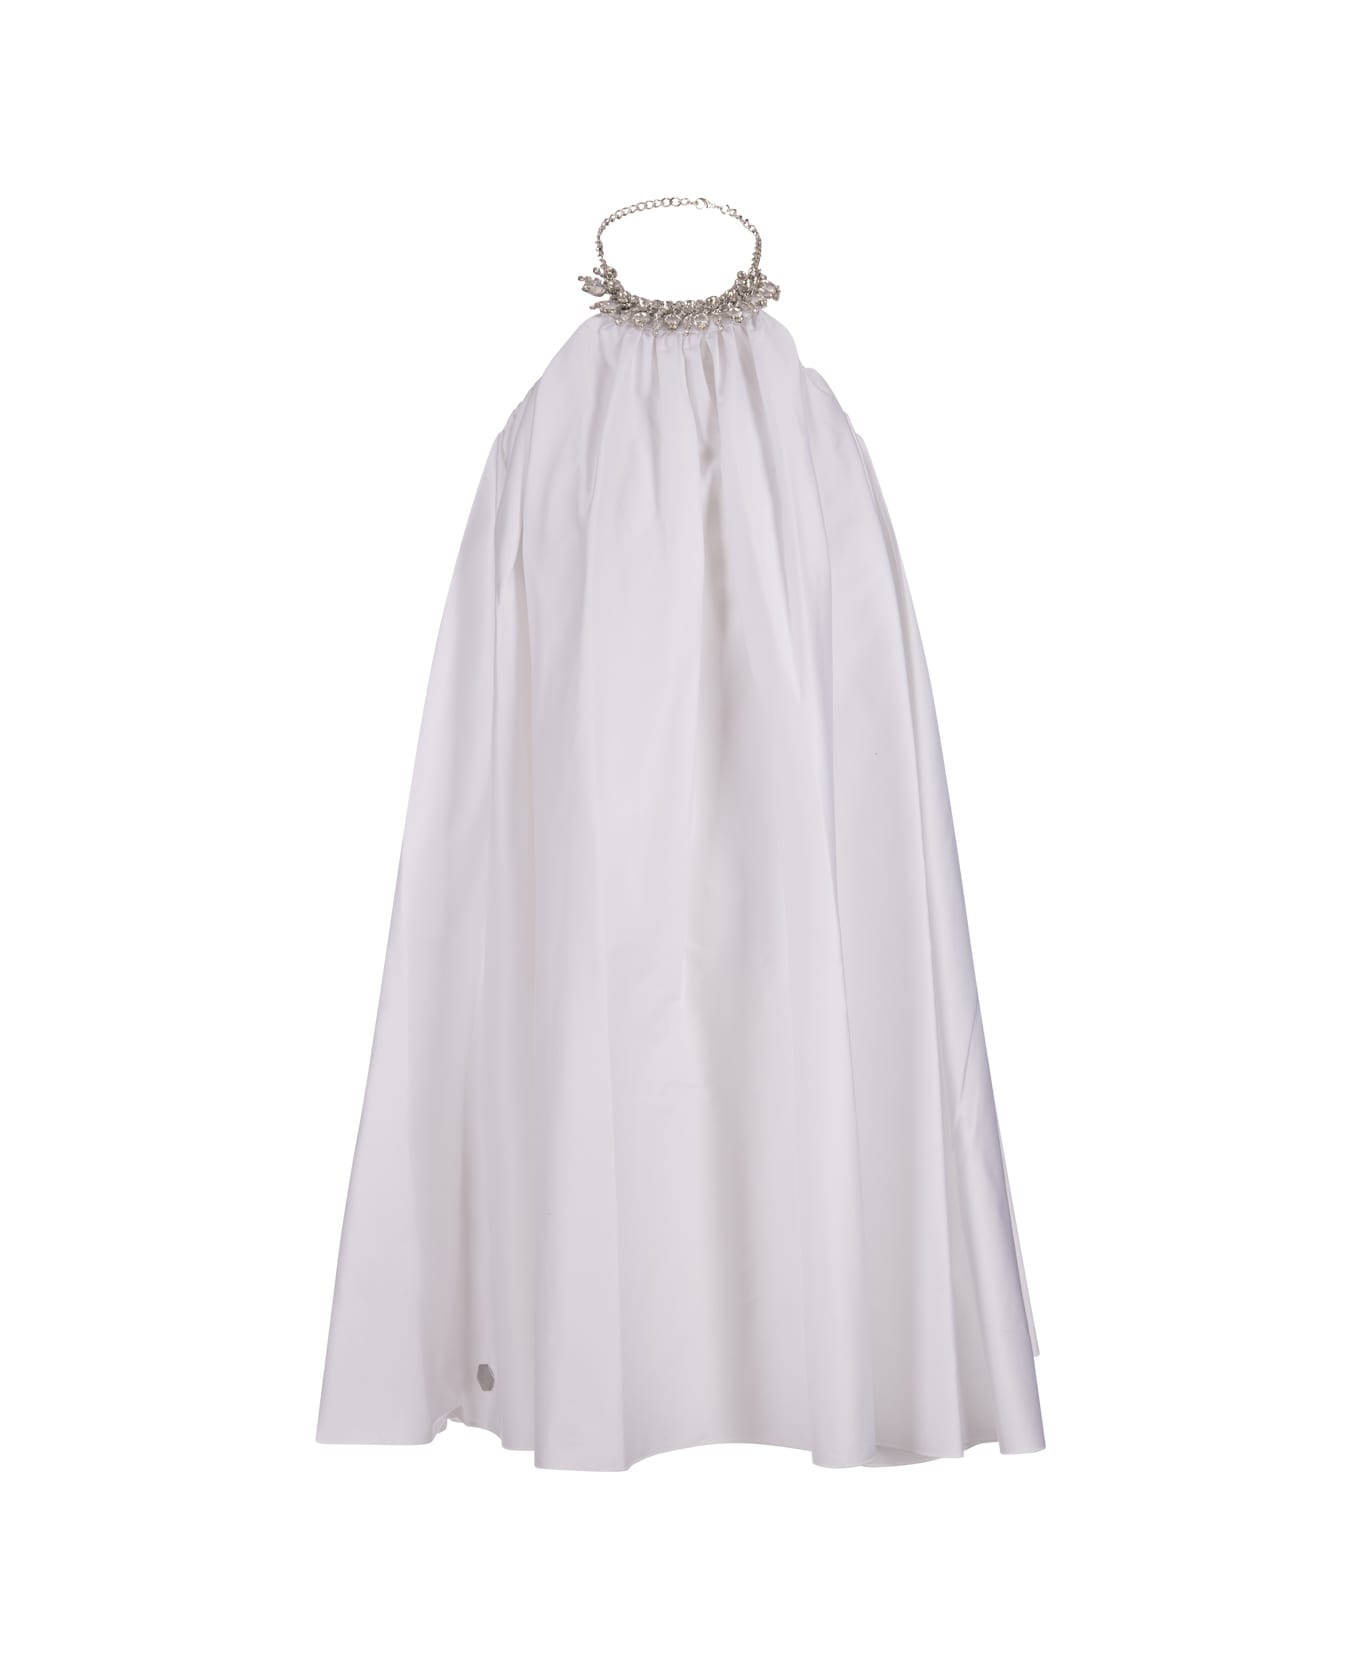 Philipp Plein White Mini Dress With Jewelled Neckline - White